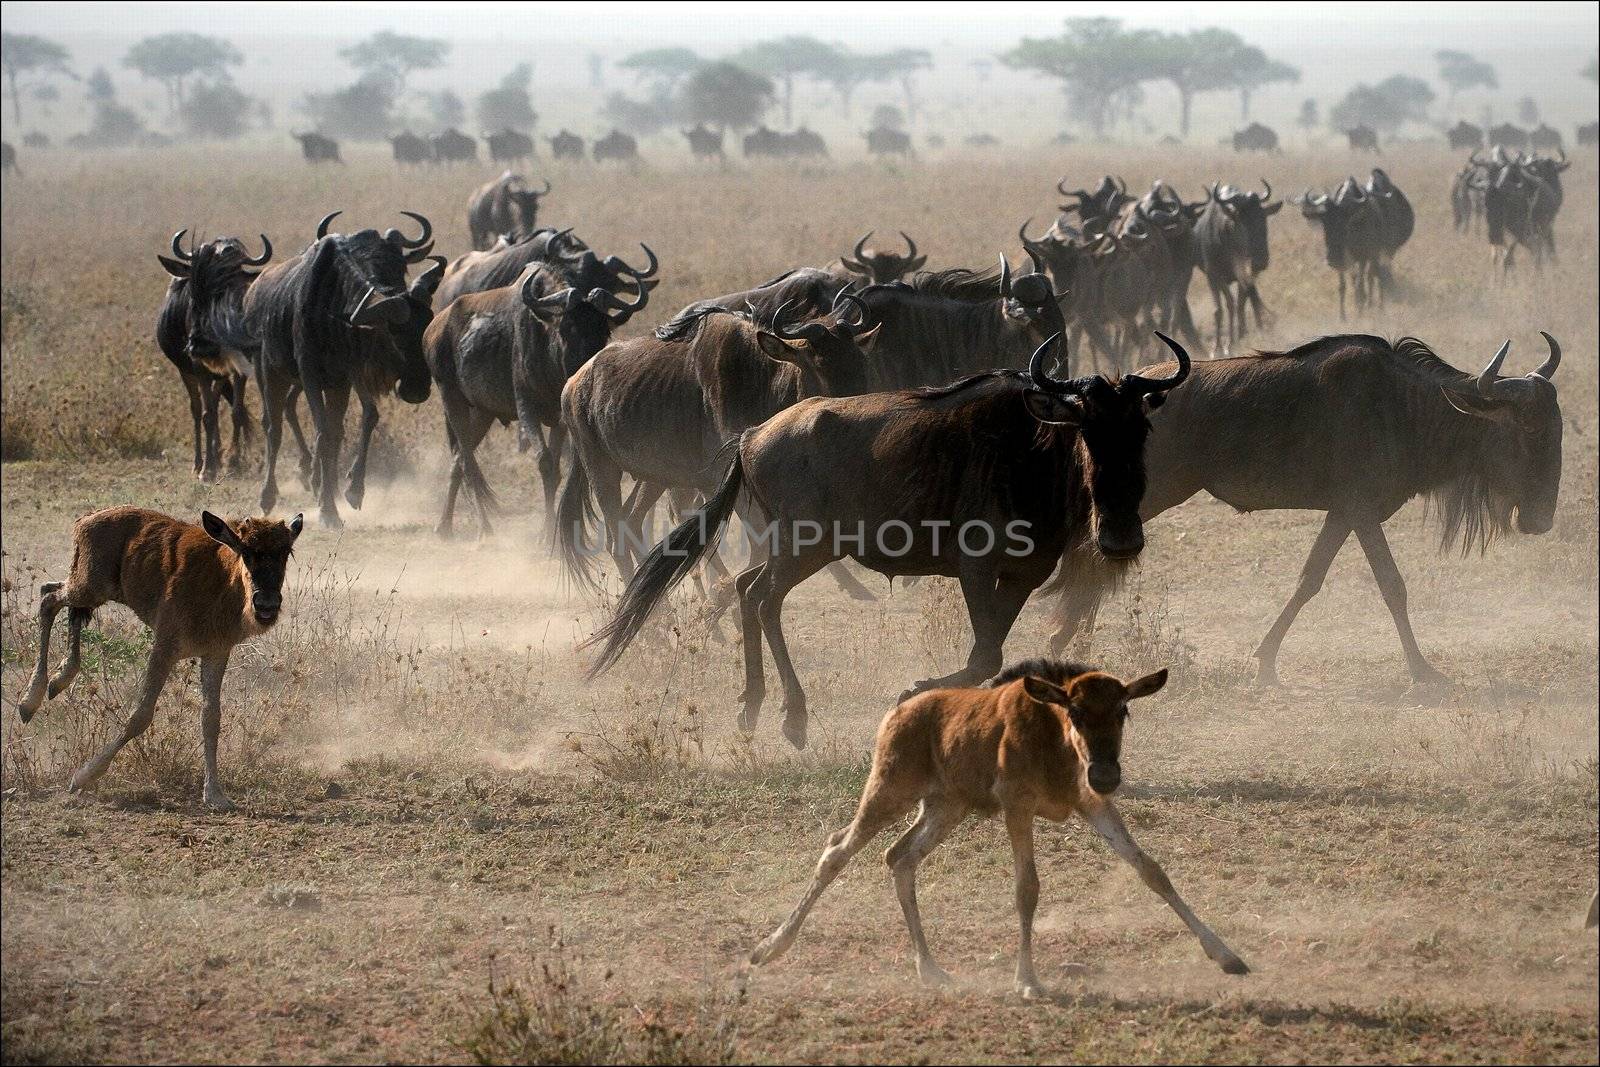 The herd of migrating wildebeest antelopes goes on dusty savanna.